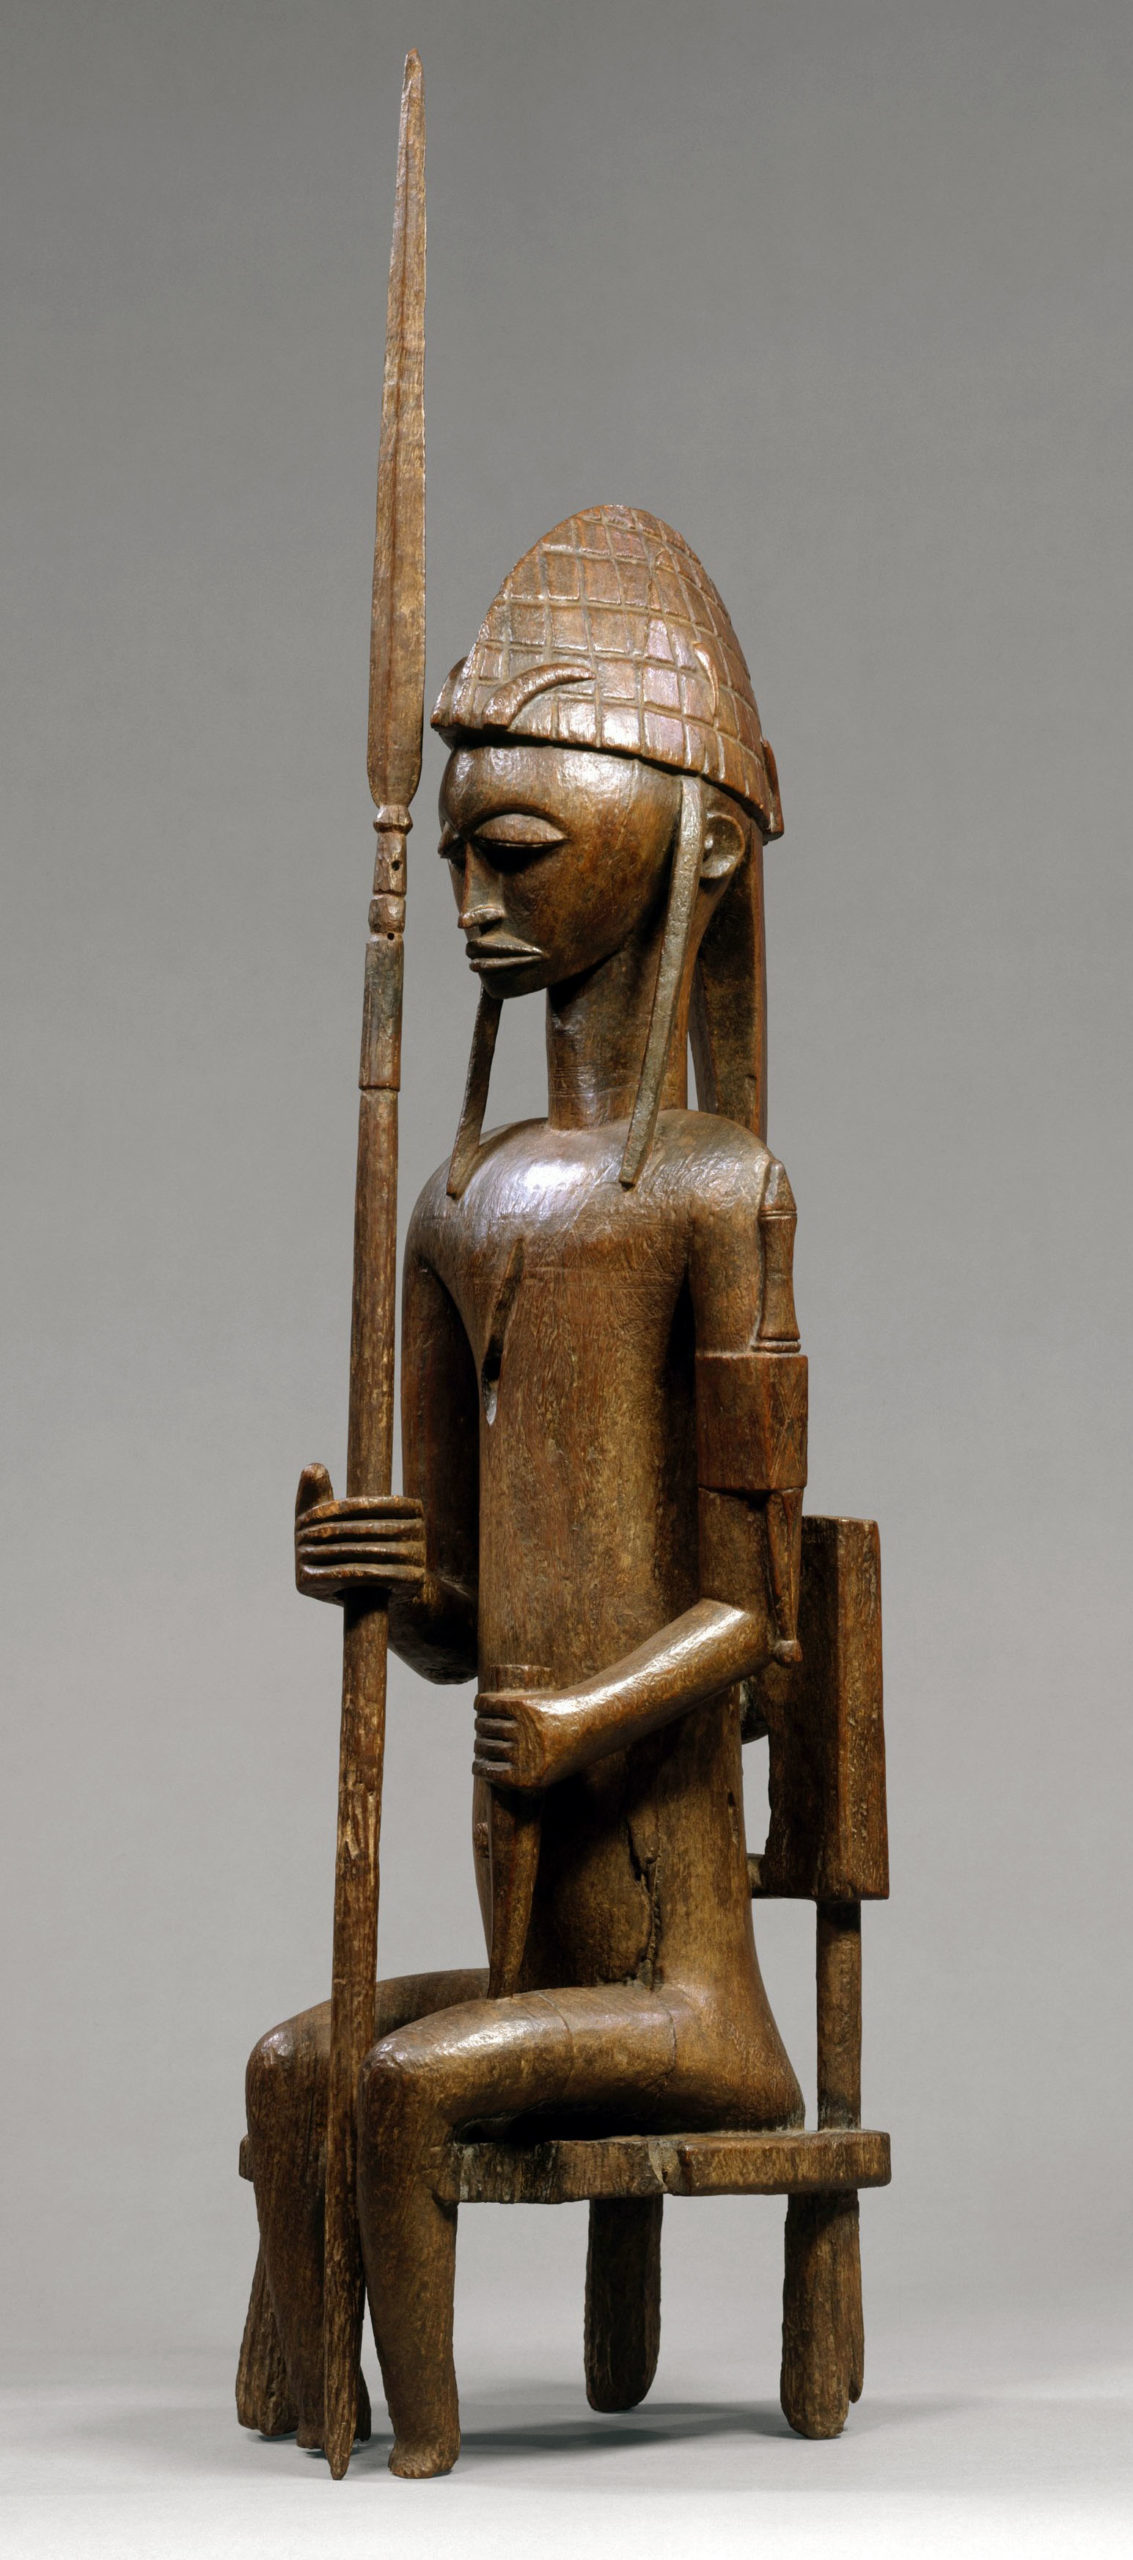 Seated Male with Lance (Gwantigi), 15th–20th century, wood, Mali, Bamana peoples, 89.9 cm high (The Metropolitan Museum of Art)